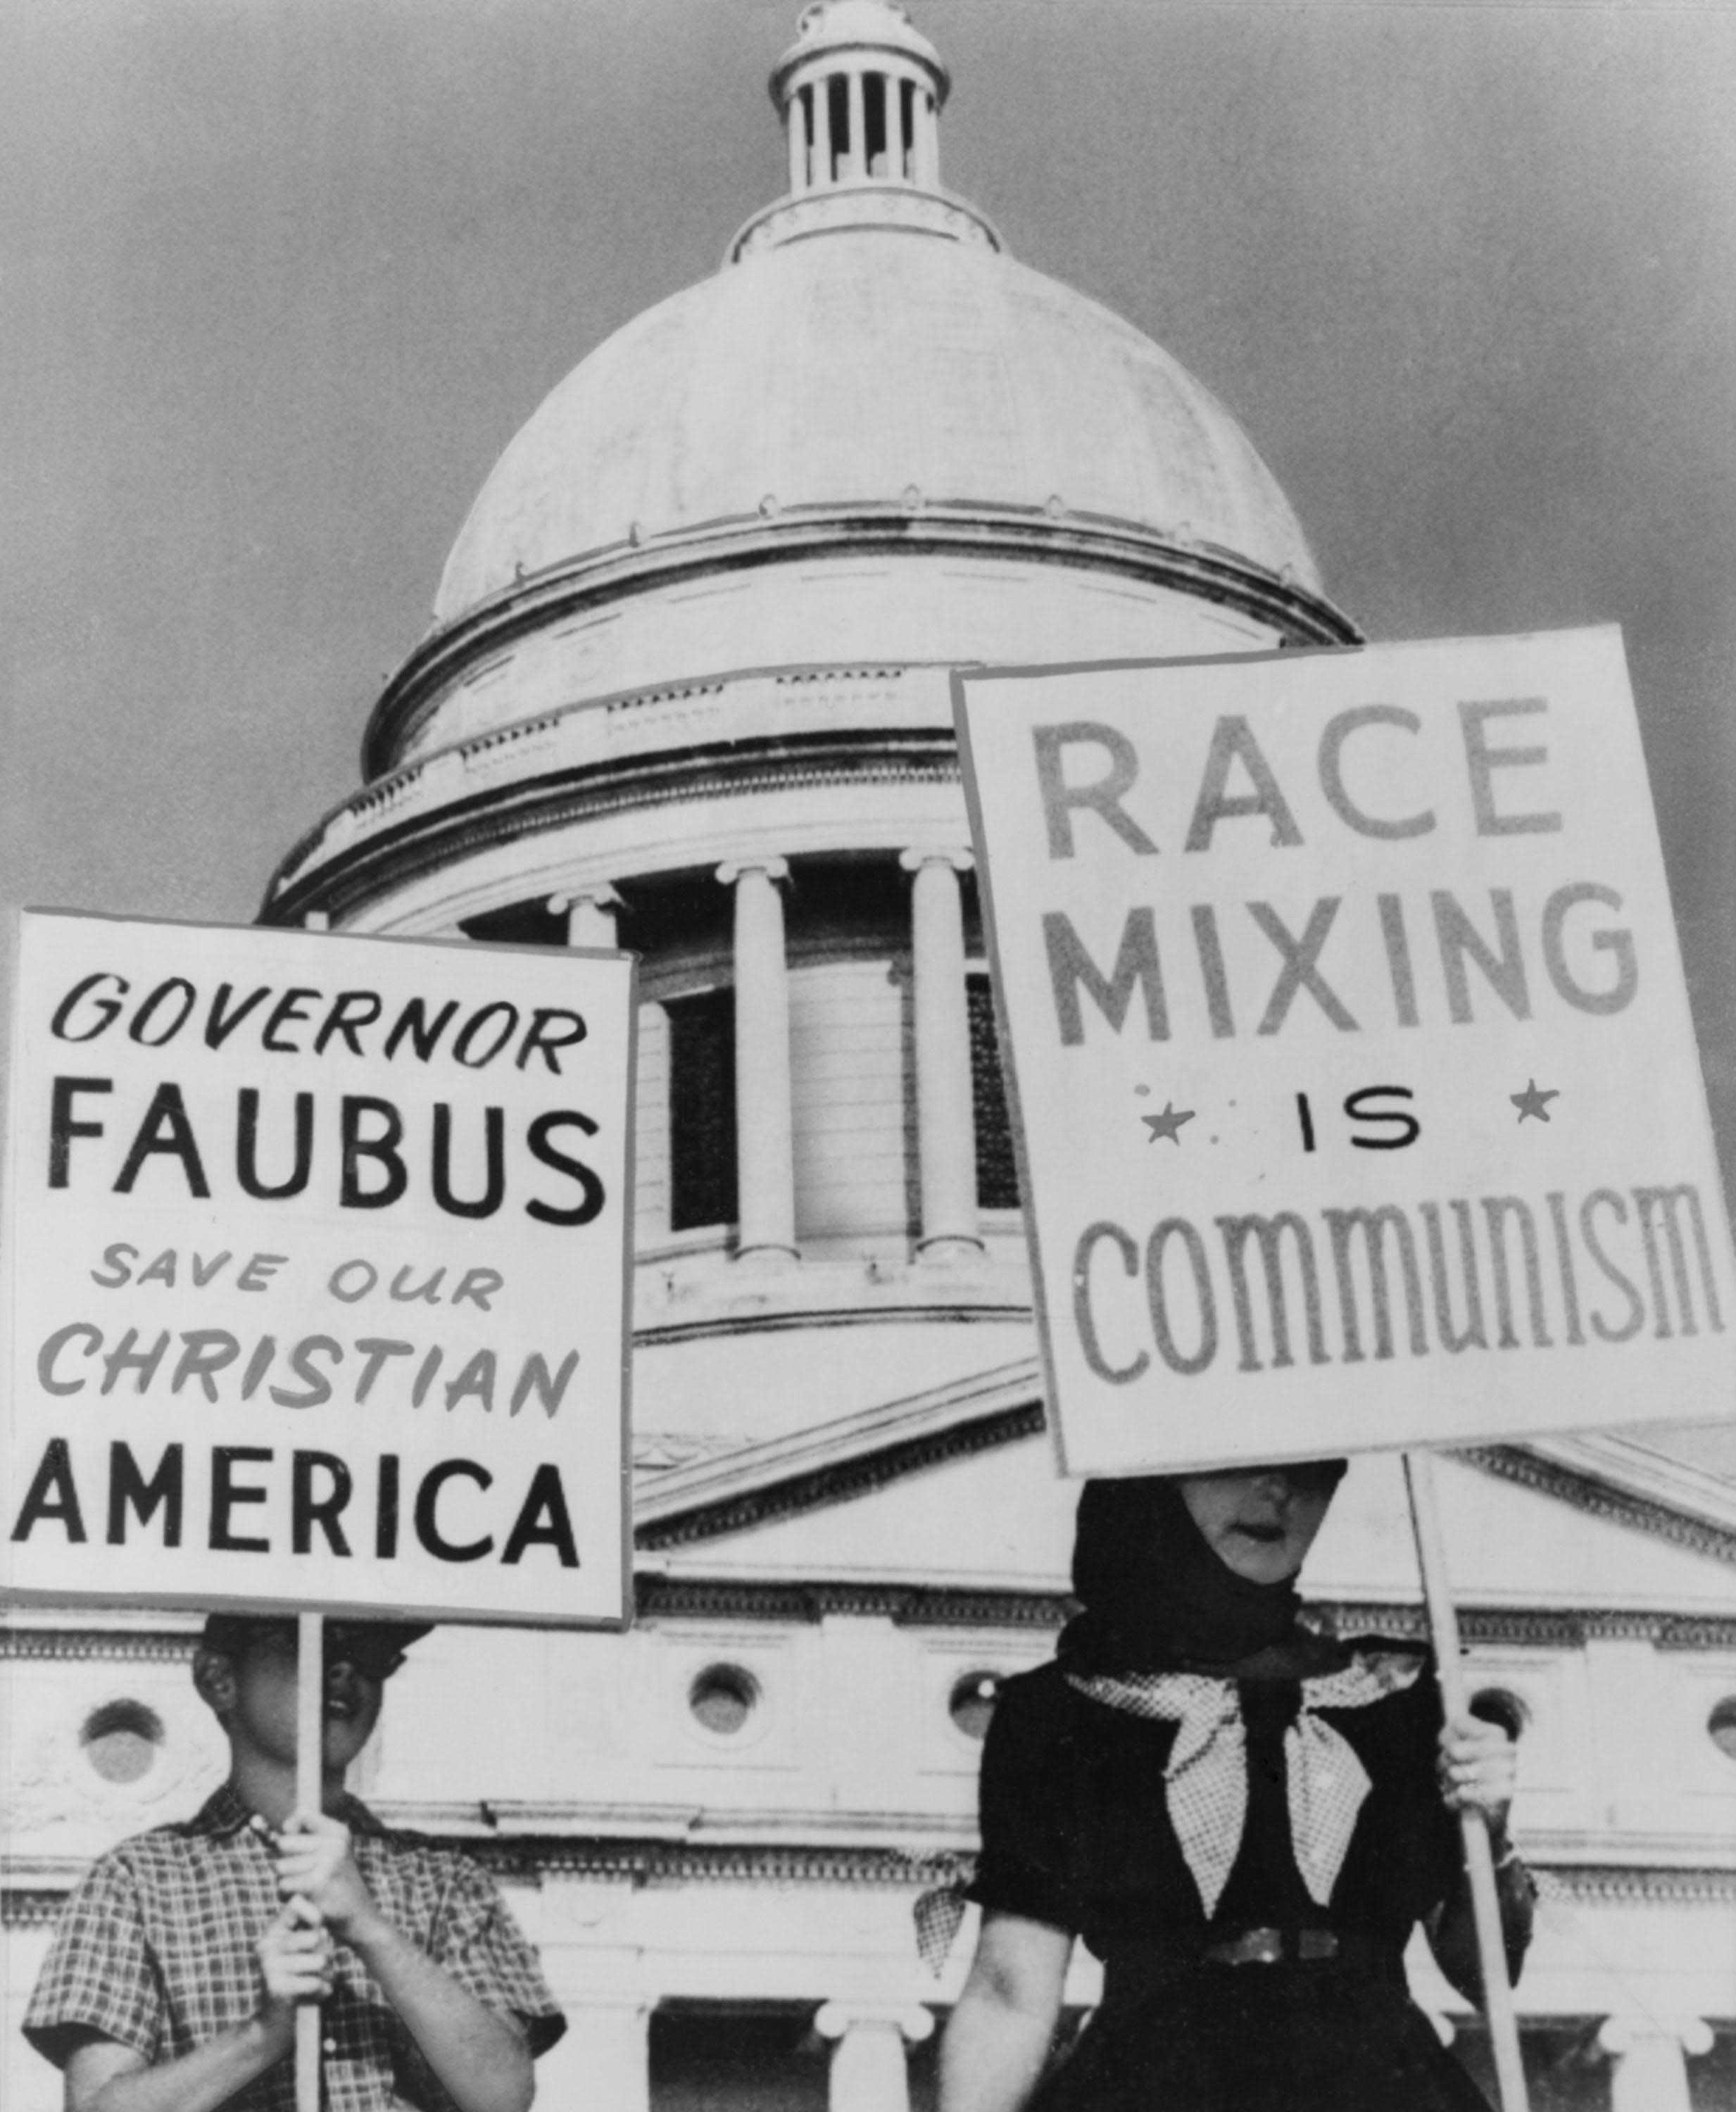 race mising is communism